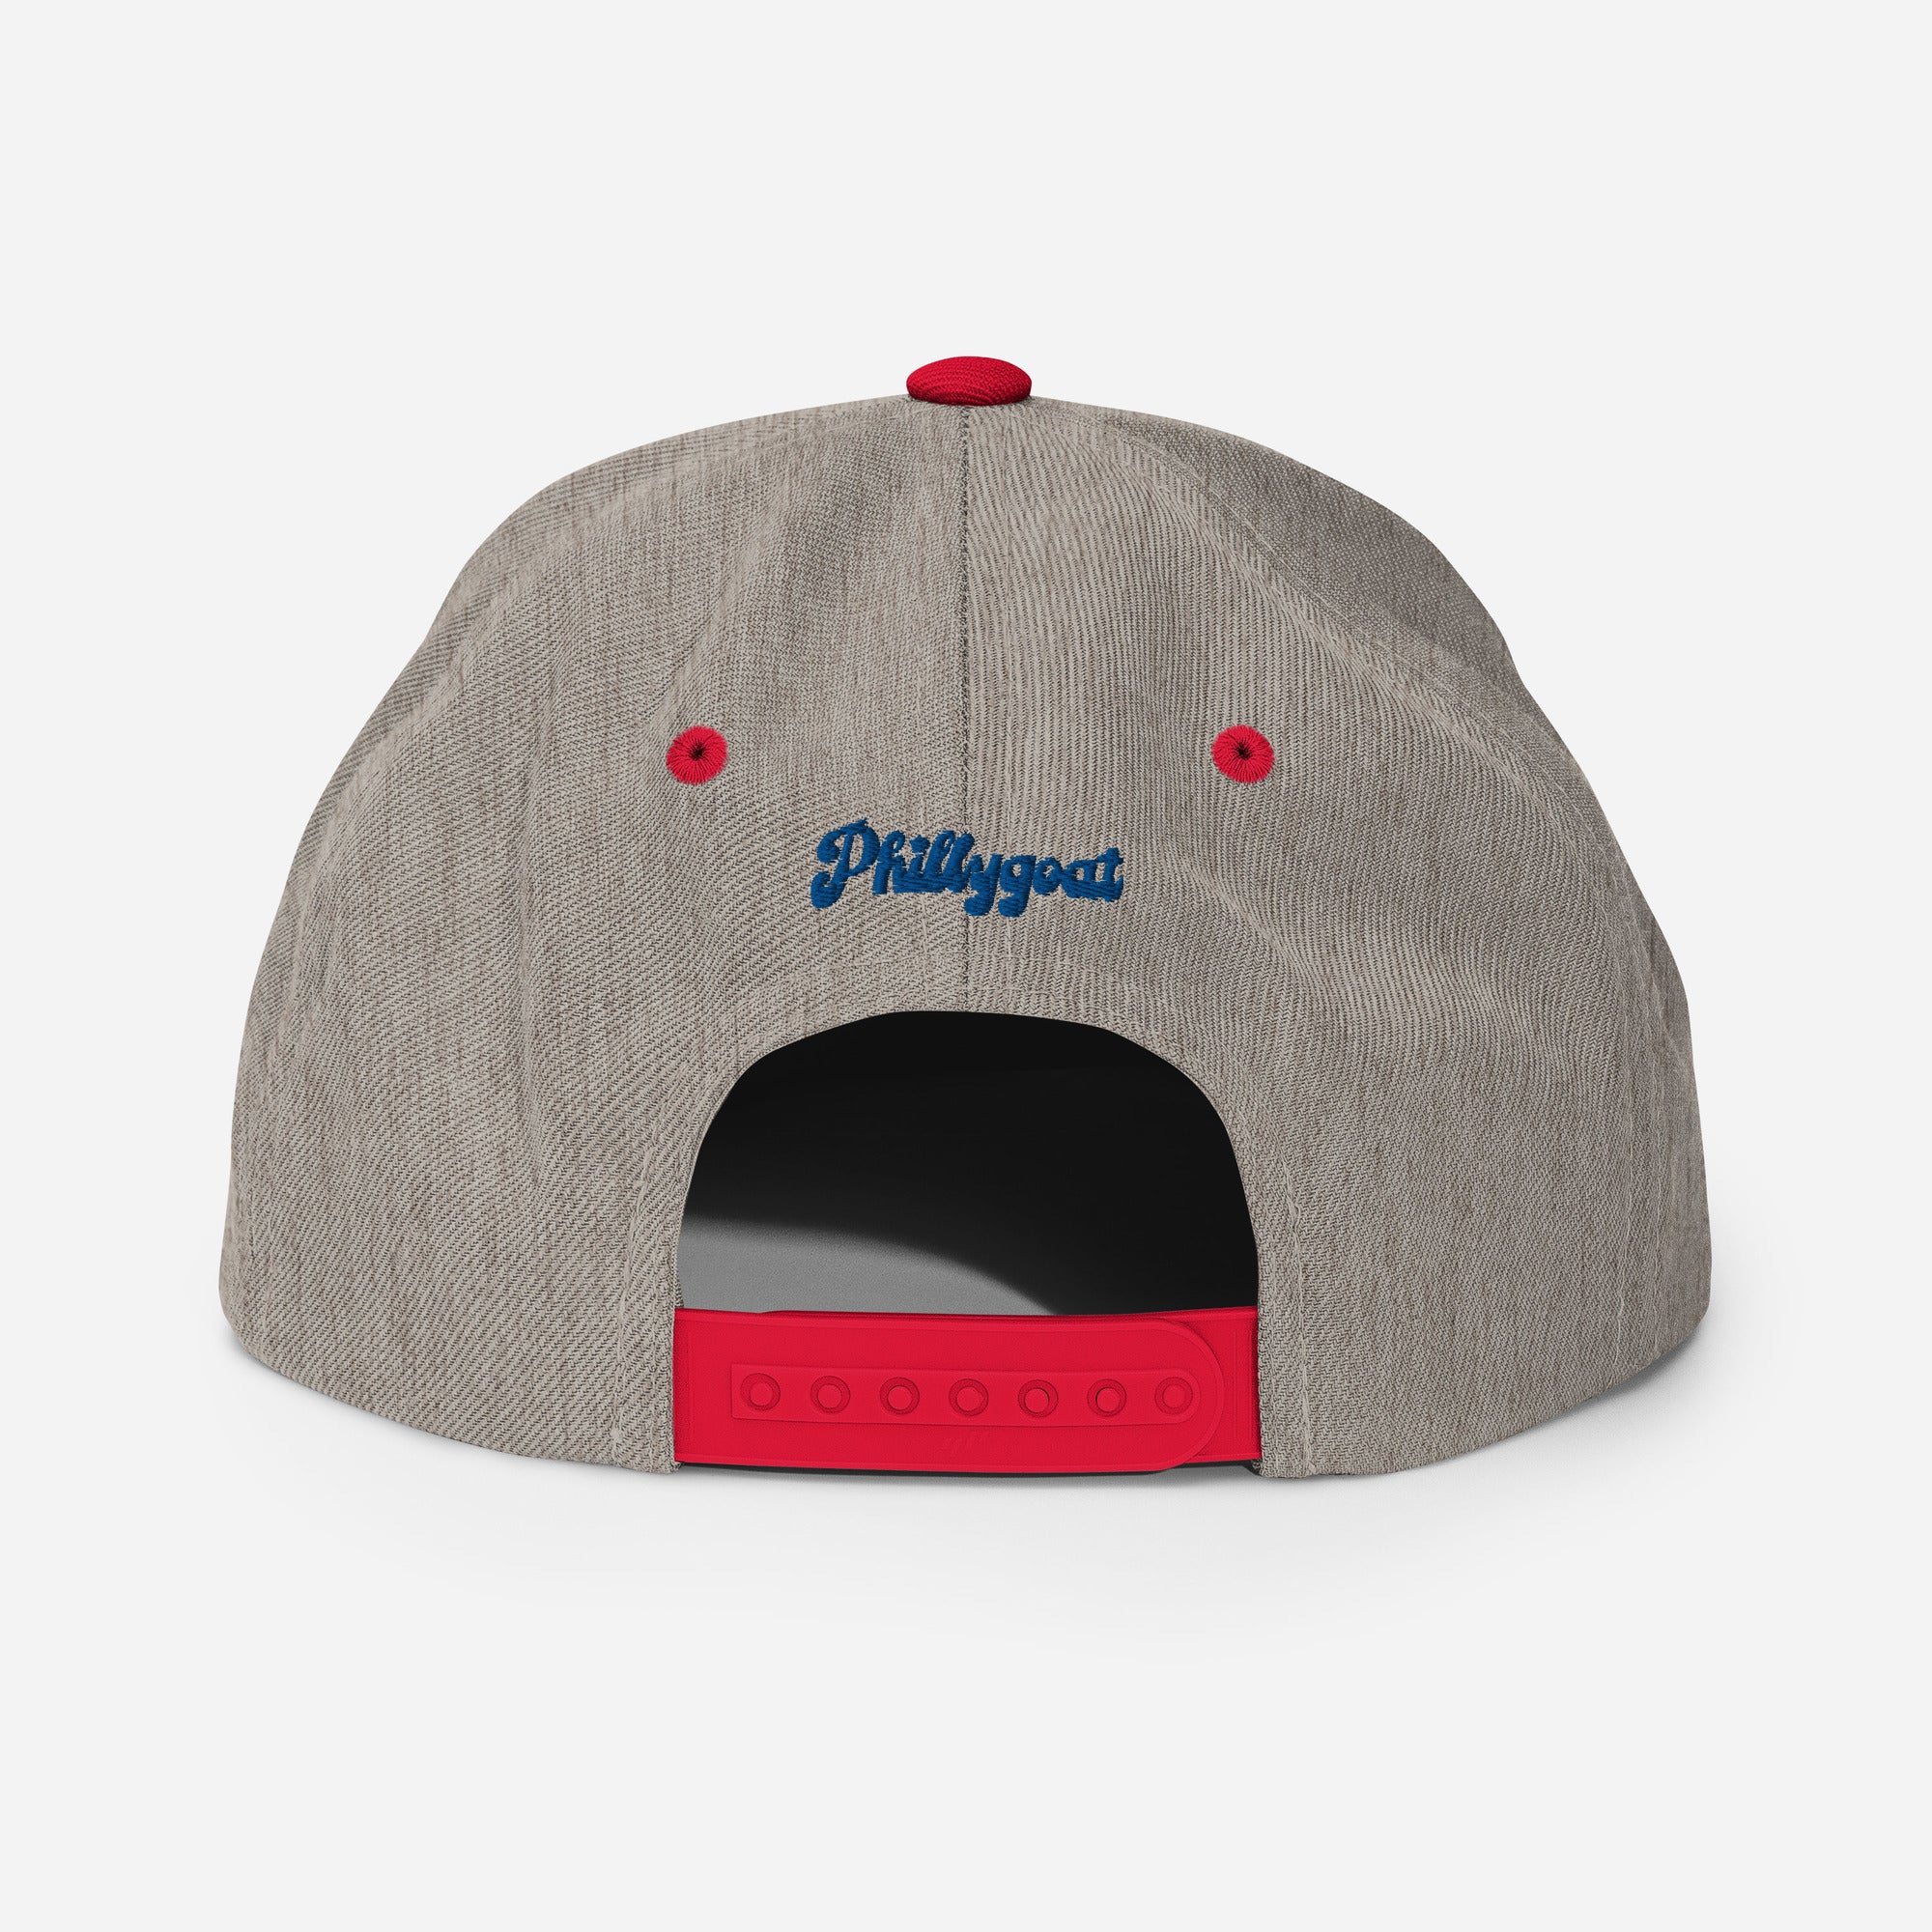 "Philadelphia Jawns" Snapback Hat